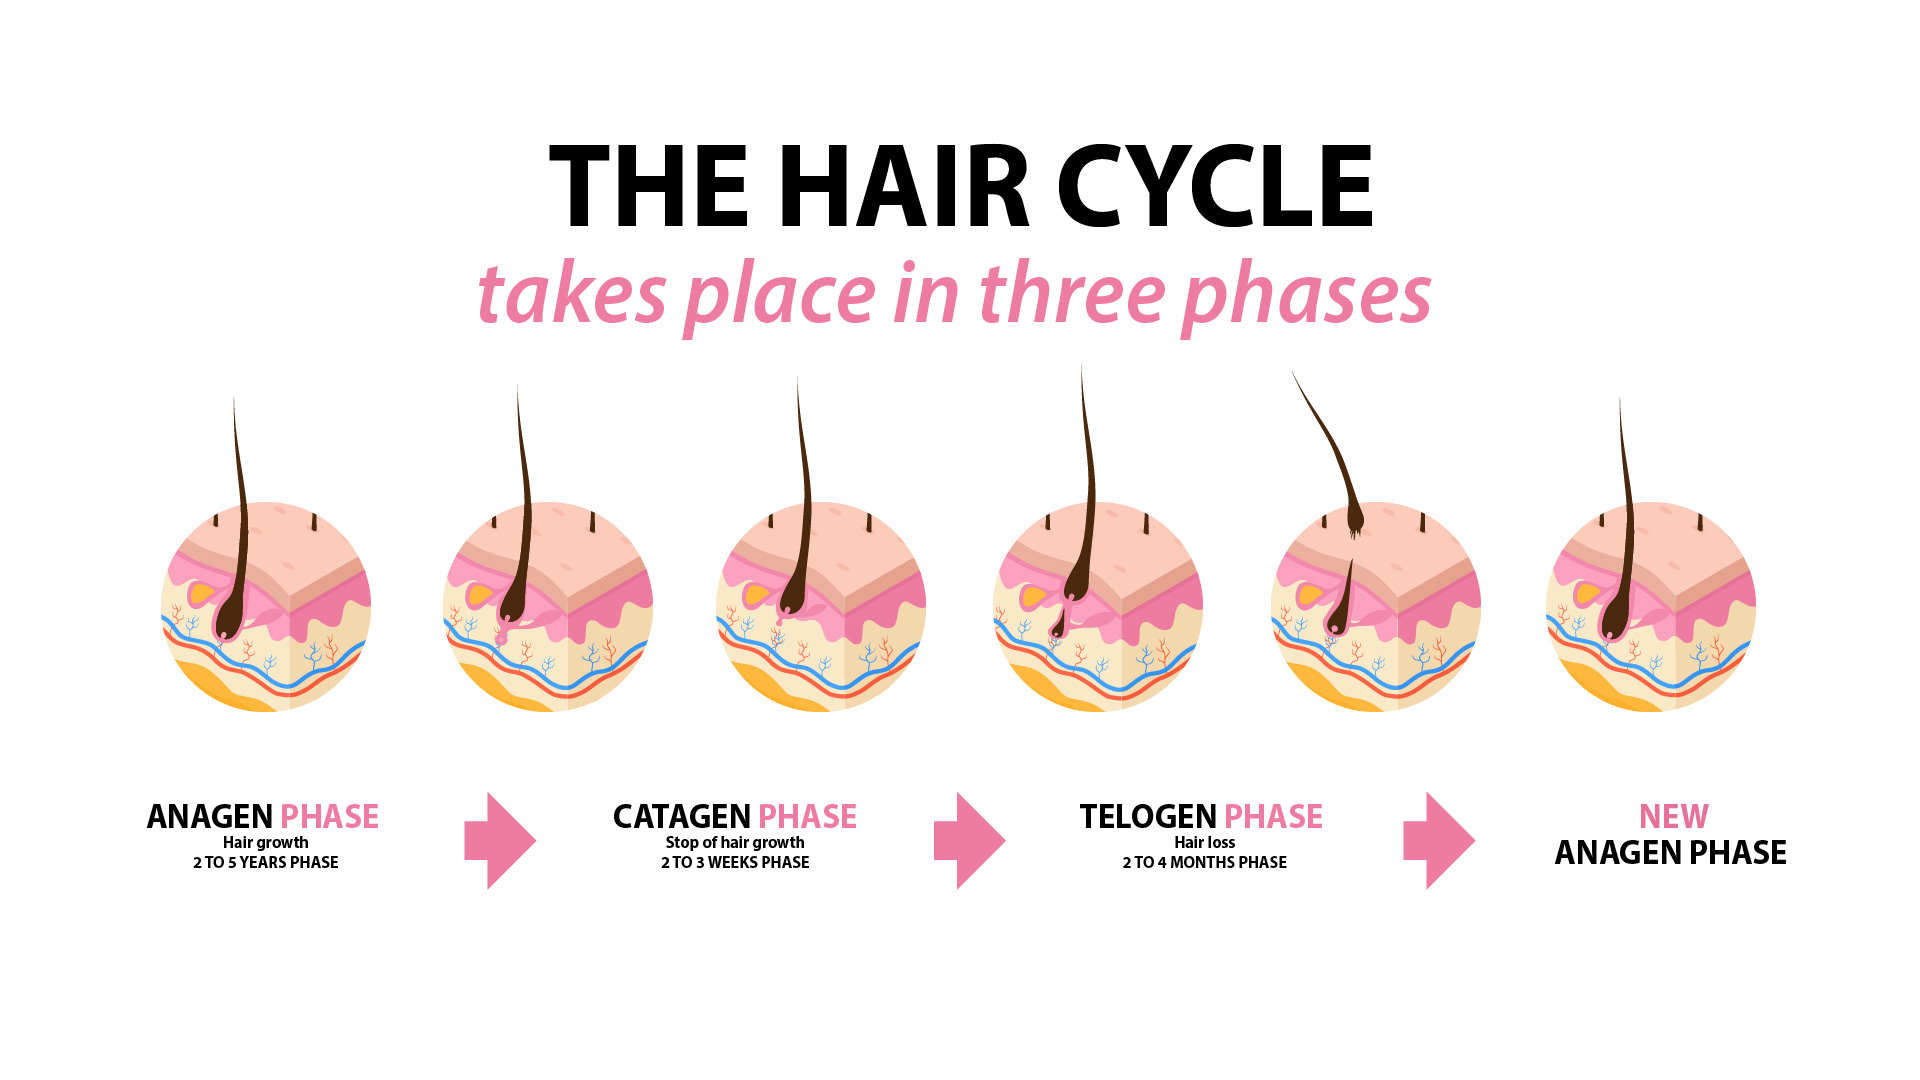 The Hair cycle